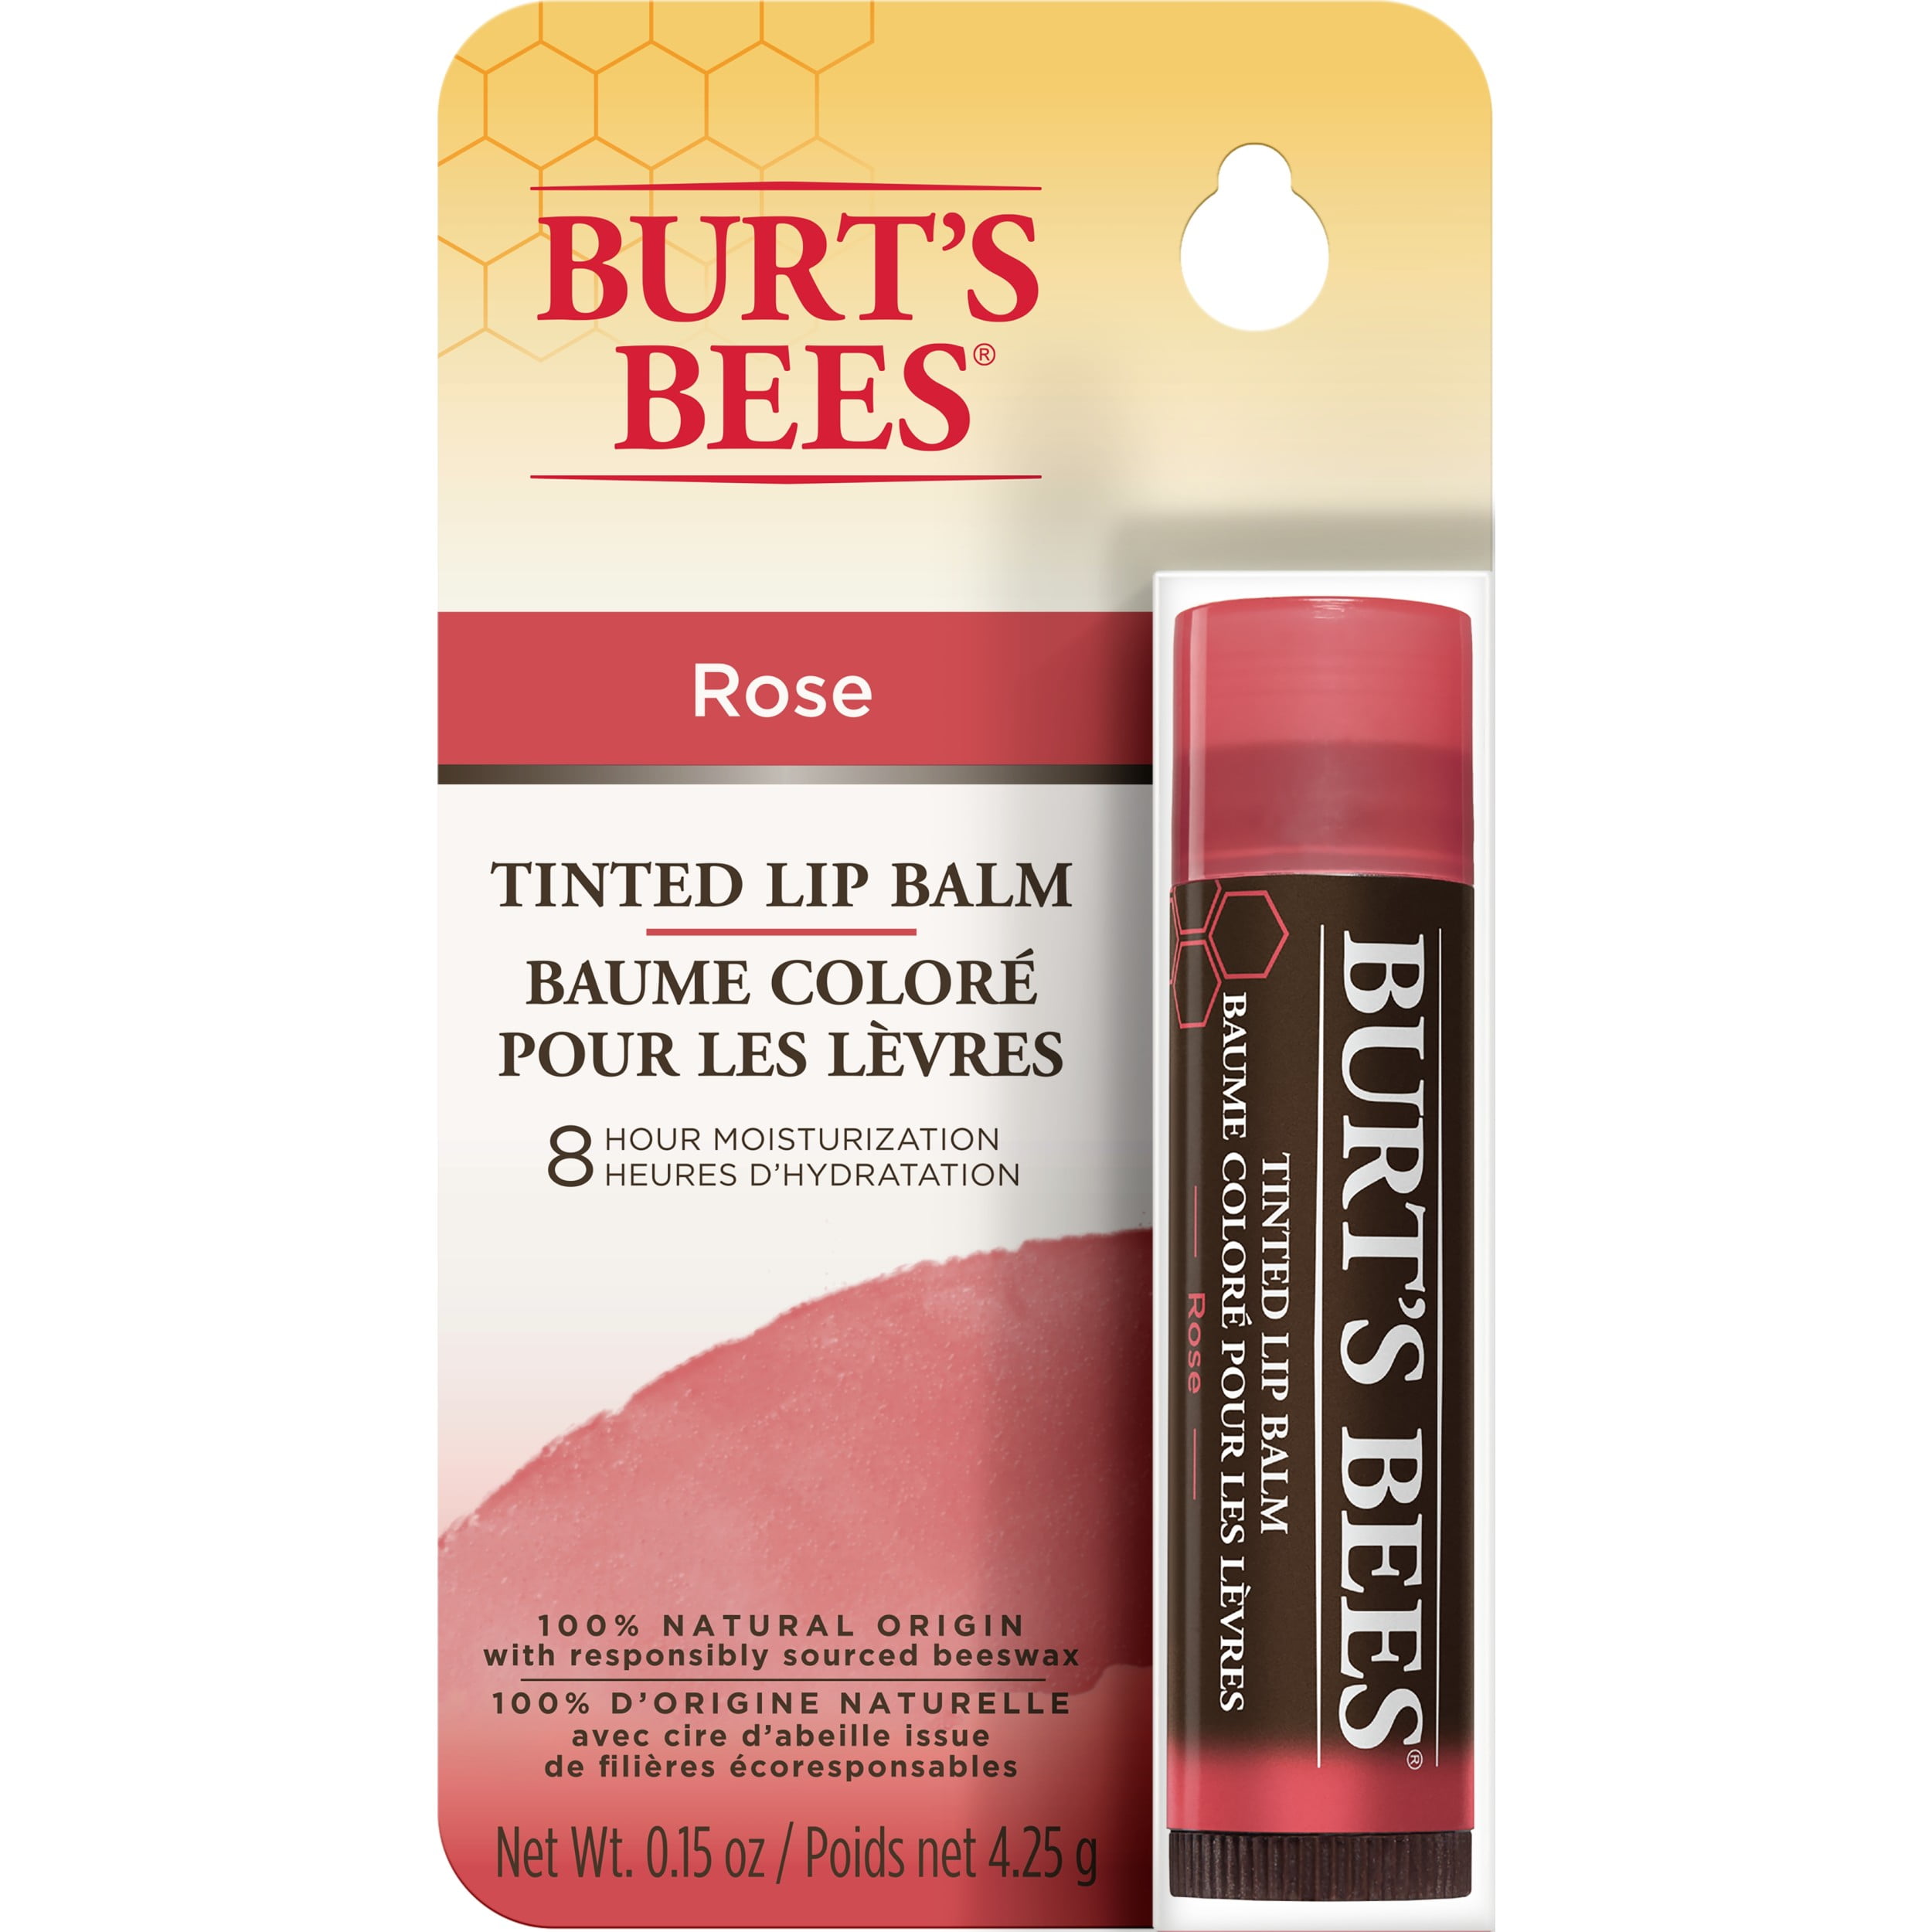 Huidige Maand faillissement Burt's Bees 100% Natural Moisturizing Tinted Lip Balm with Shea Butter,  Rose, 1 Tube - Walmart.com